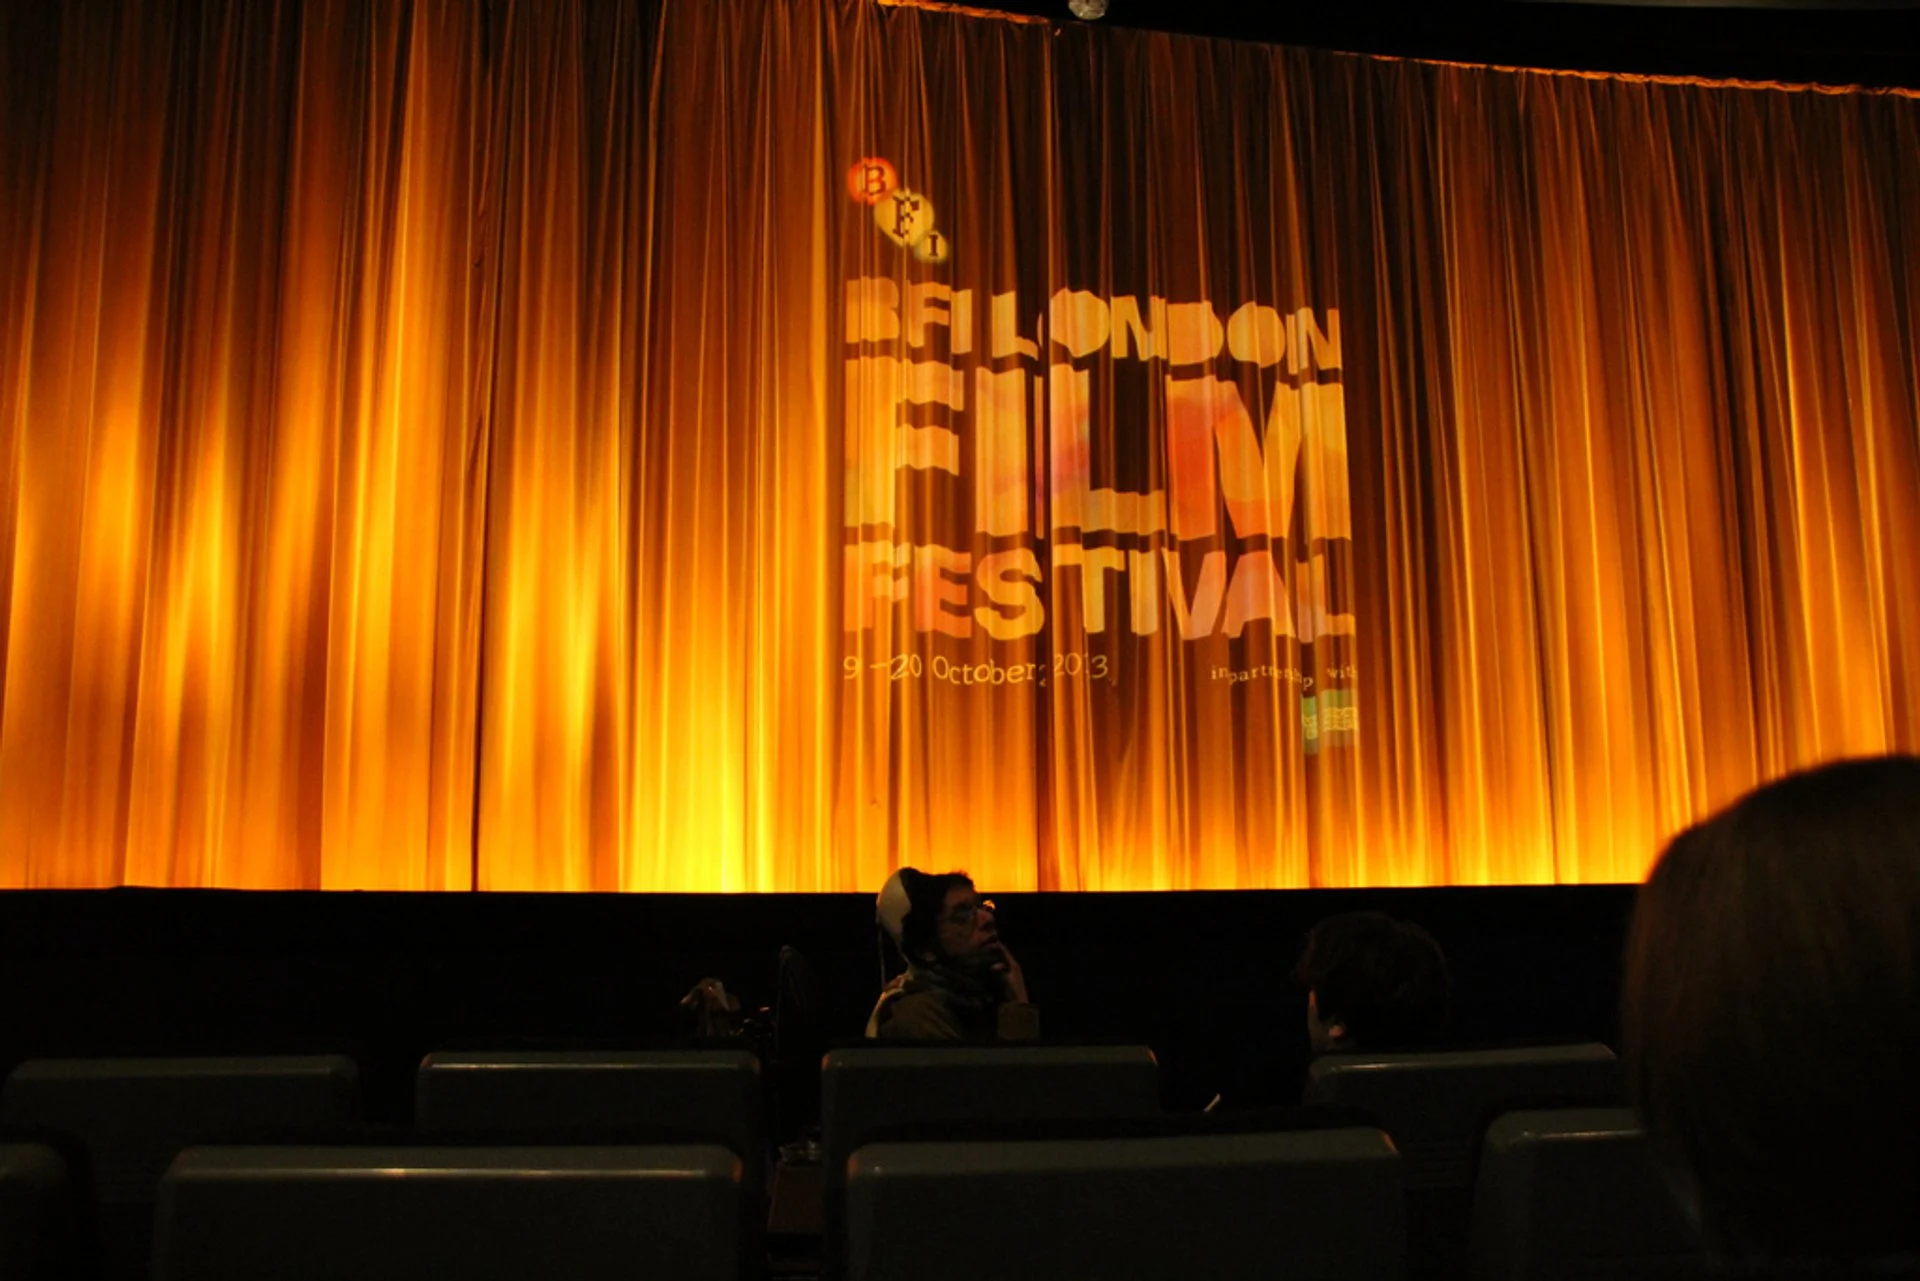 BFI London Film Festival 2023